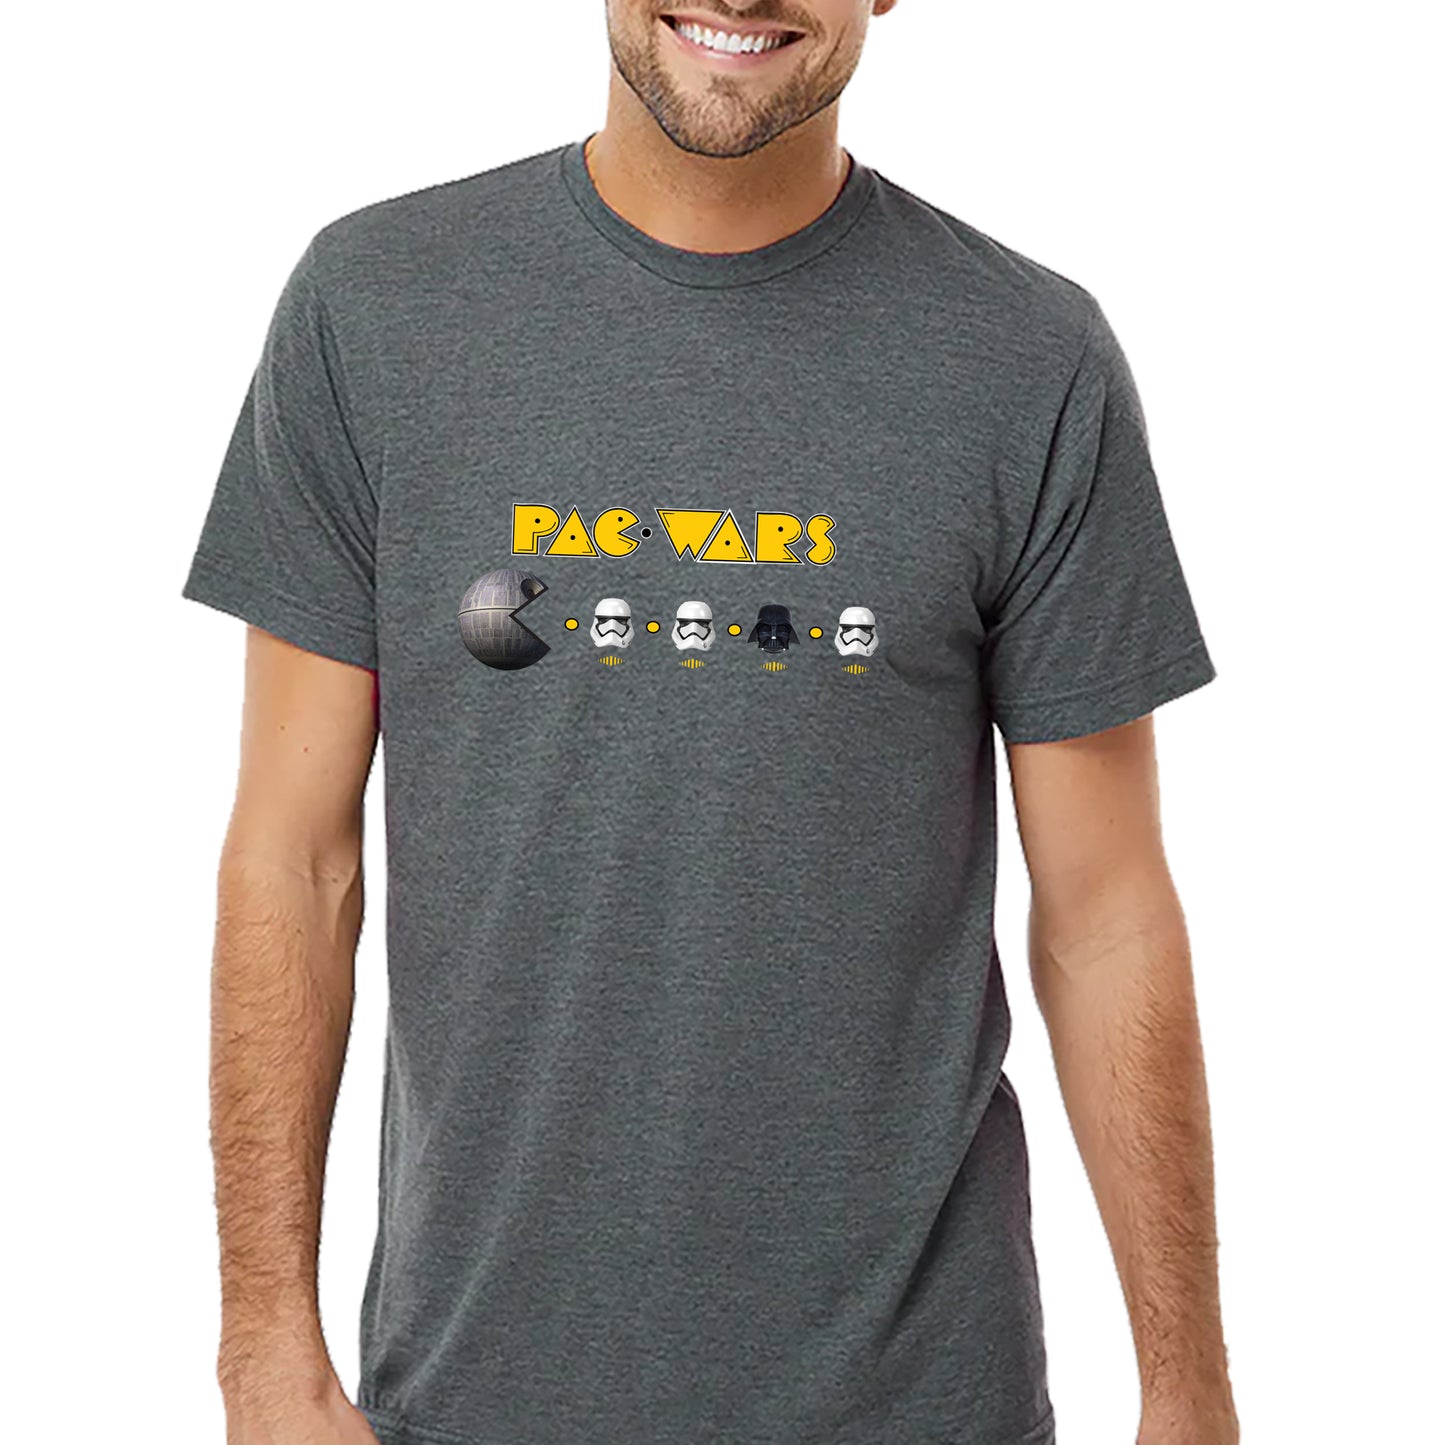 Pac Wars T-shirt